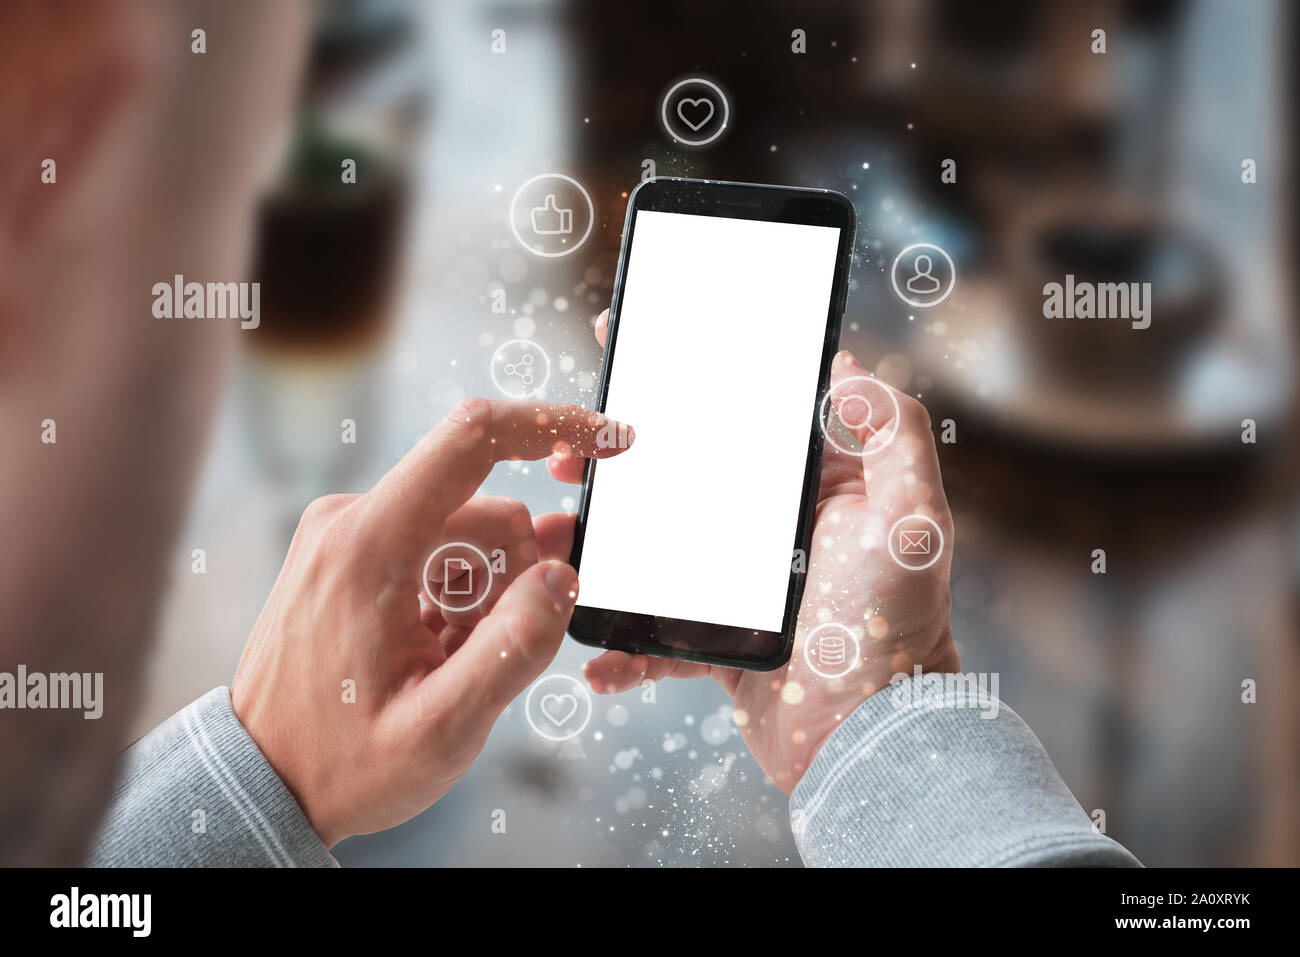 Telefon mockup mit Social Network icons umgeben. Isolierte Bildschirm für App design Promotion. Stockfoto